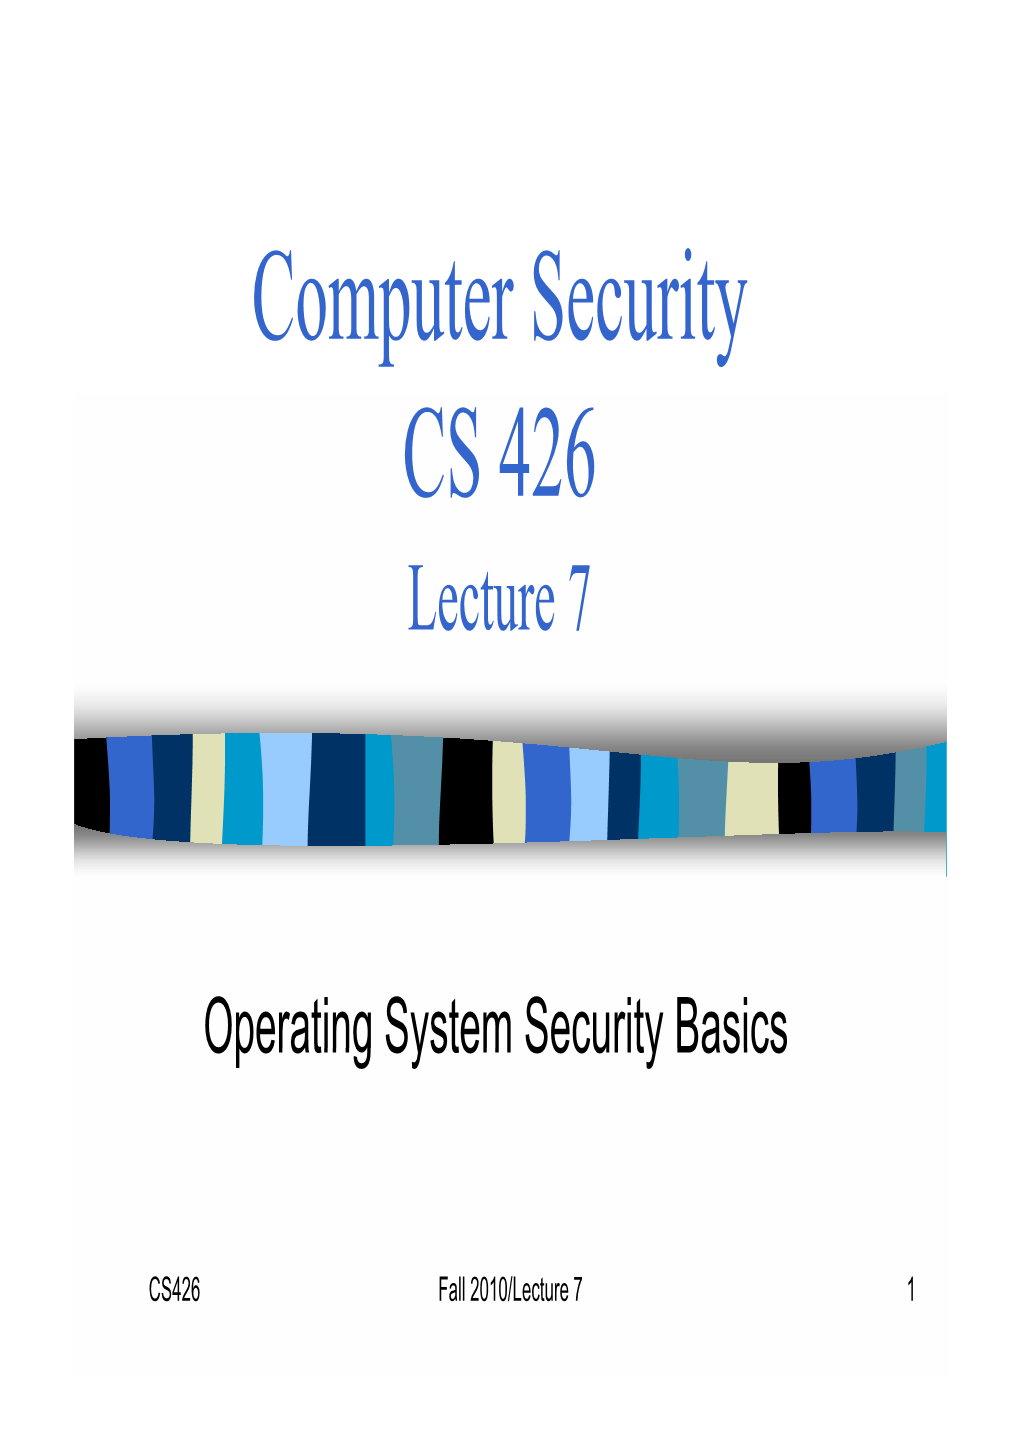 Operating System Security Basics